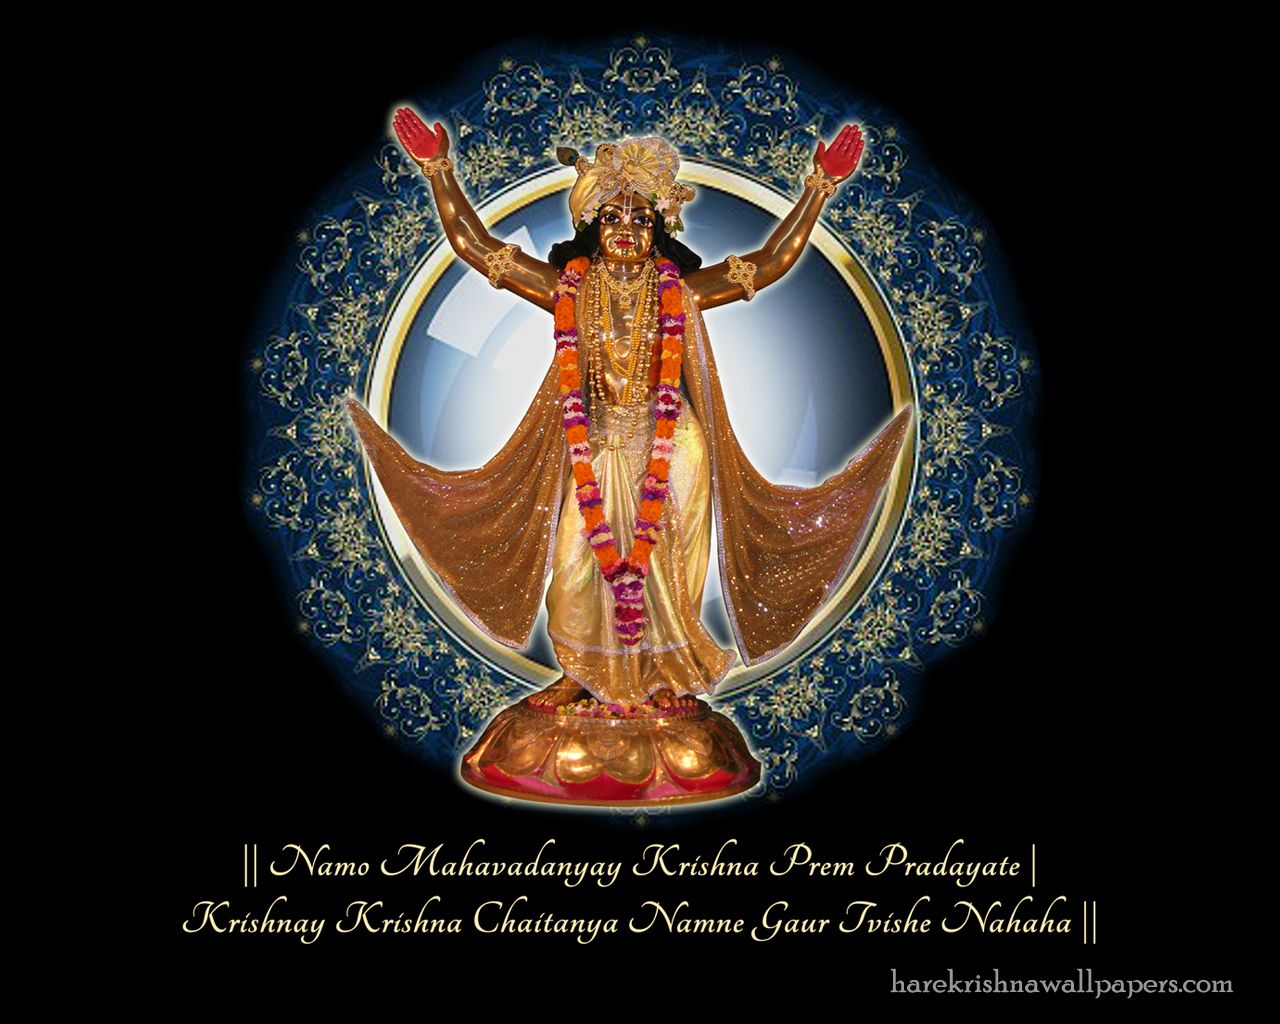 Chaitanya Mahaprabhu Wallpaper (001) Size 1280×1024 Download. Hare Krishna Wallpaper